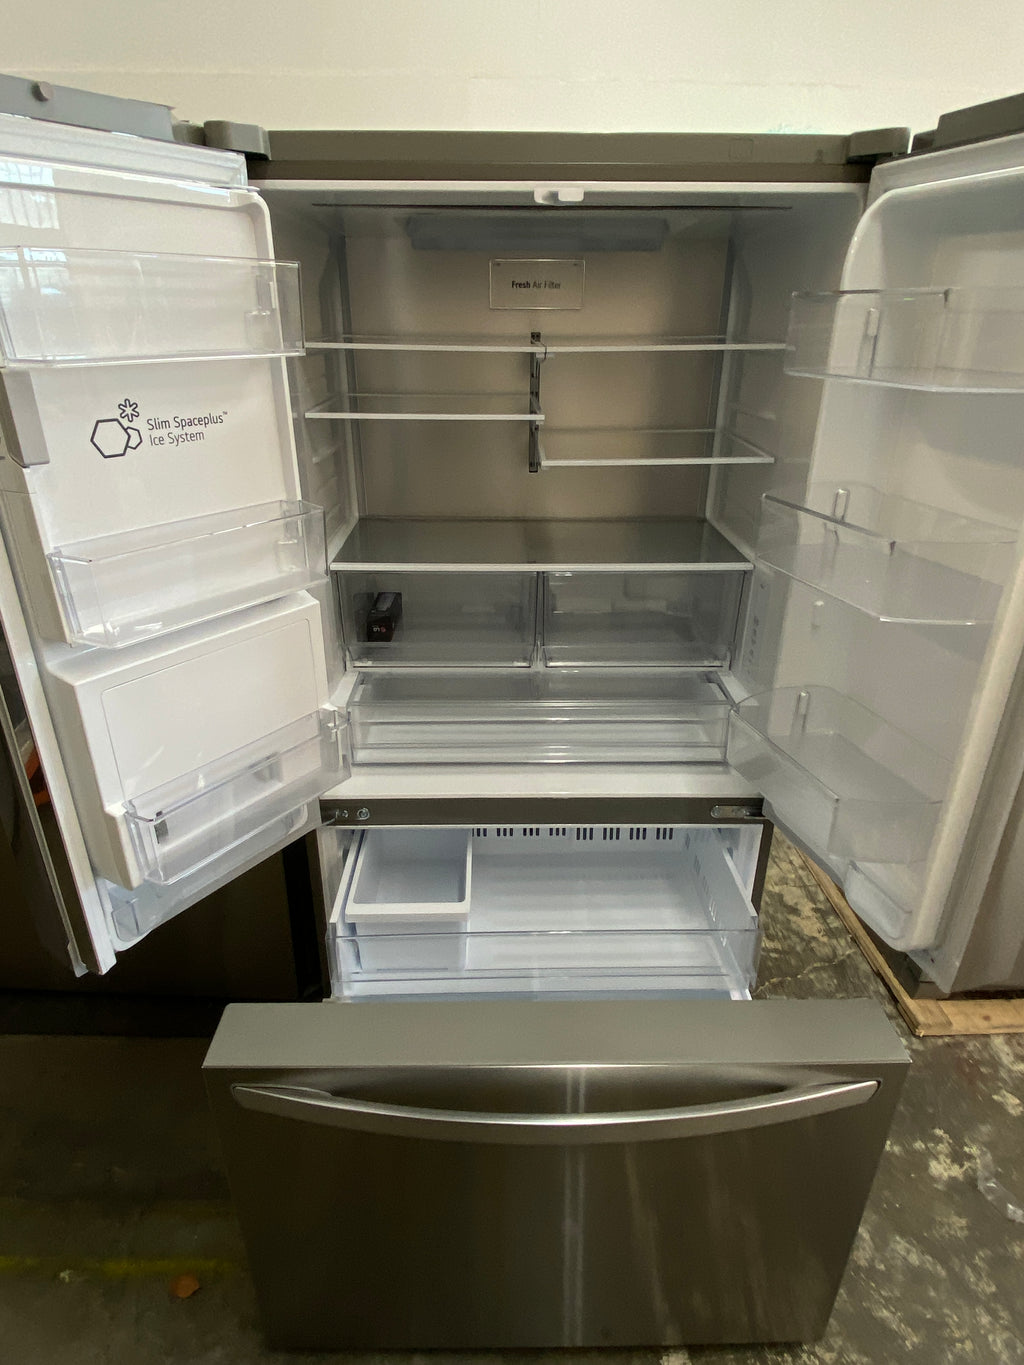 LG 29 cu. ft. SMART Standard Depth MAX French Door Refrigerator